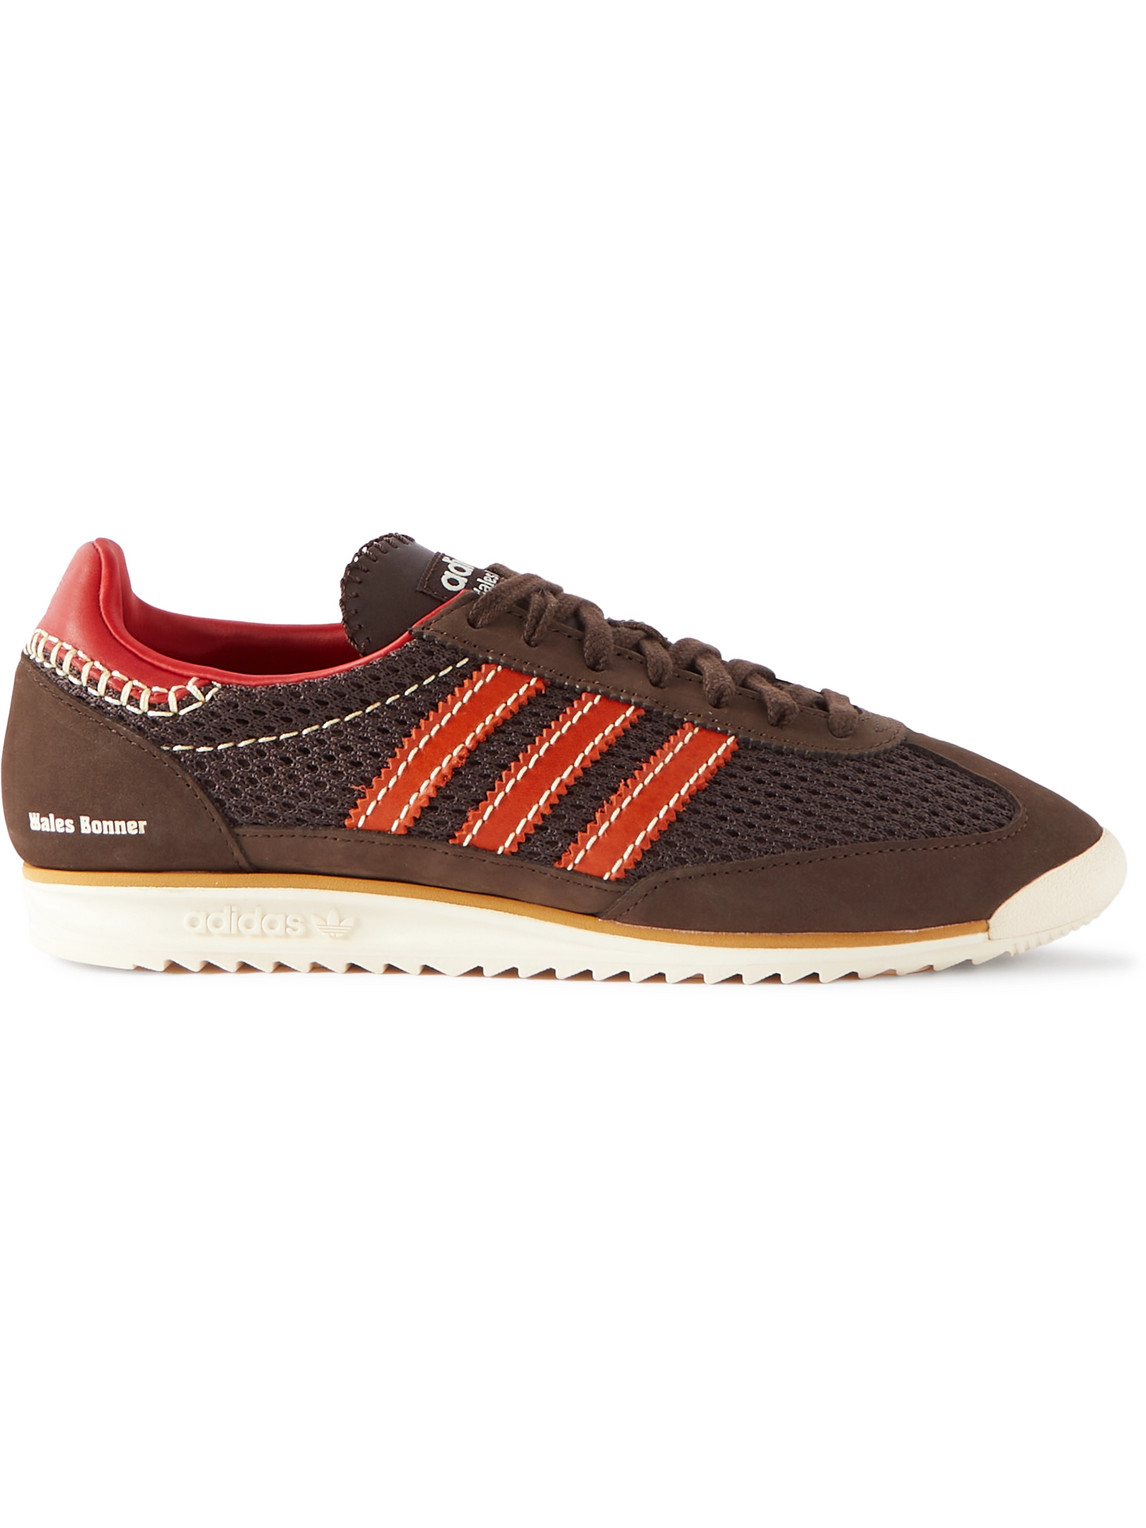 Adidas Consortium Wales Bonner Sl72 Suede And Mesh Sneakers In Brown